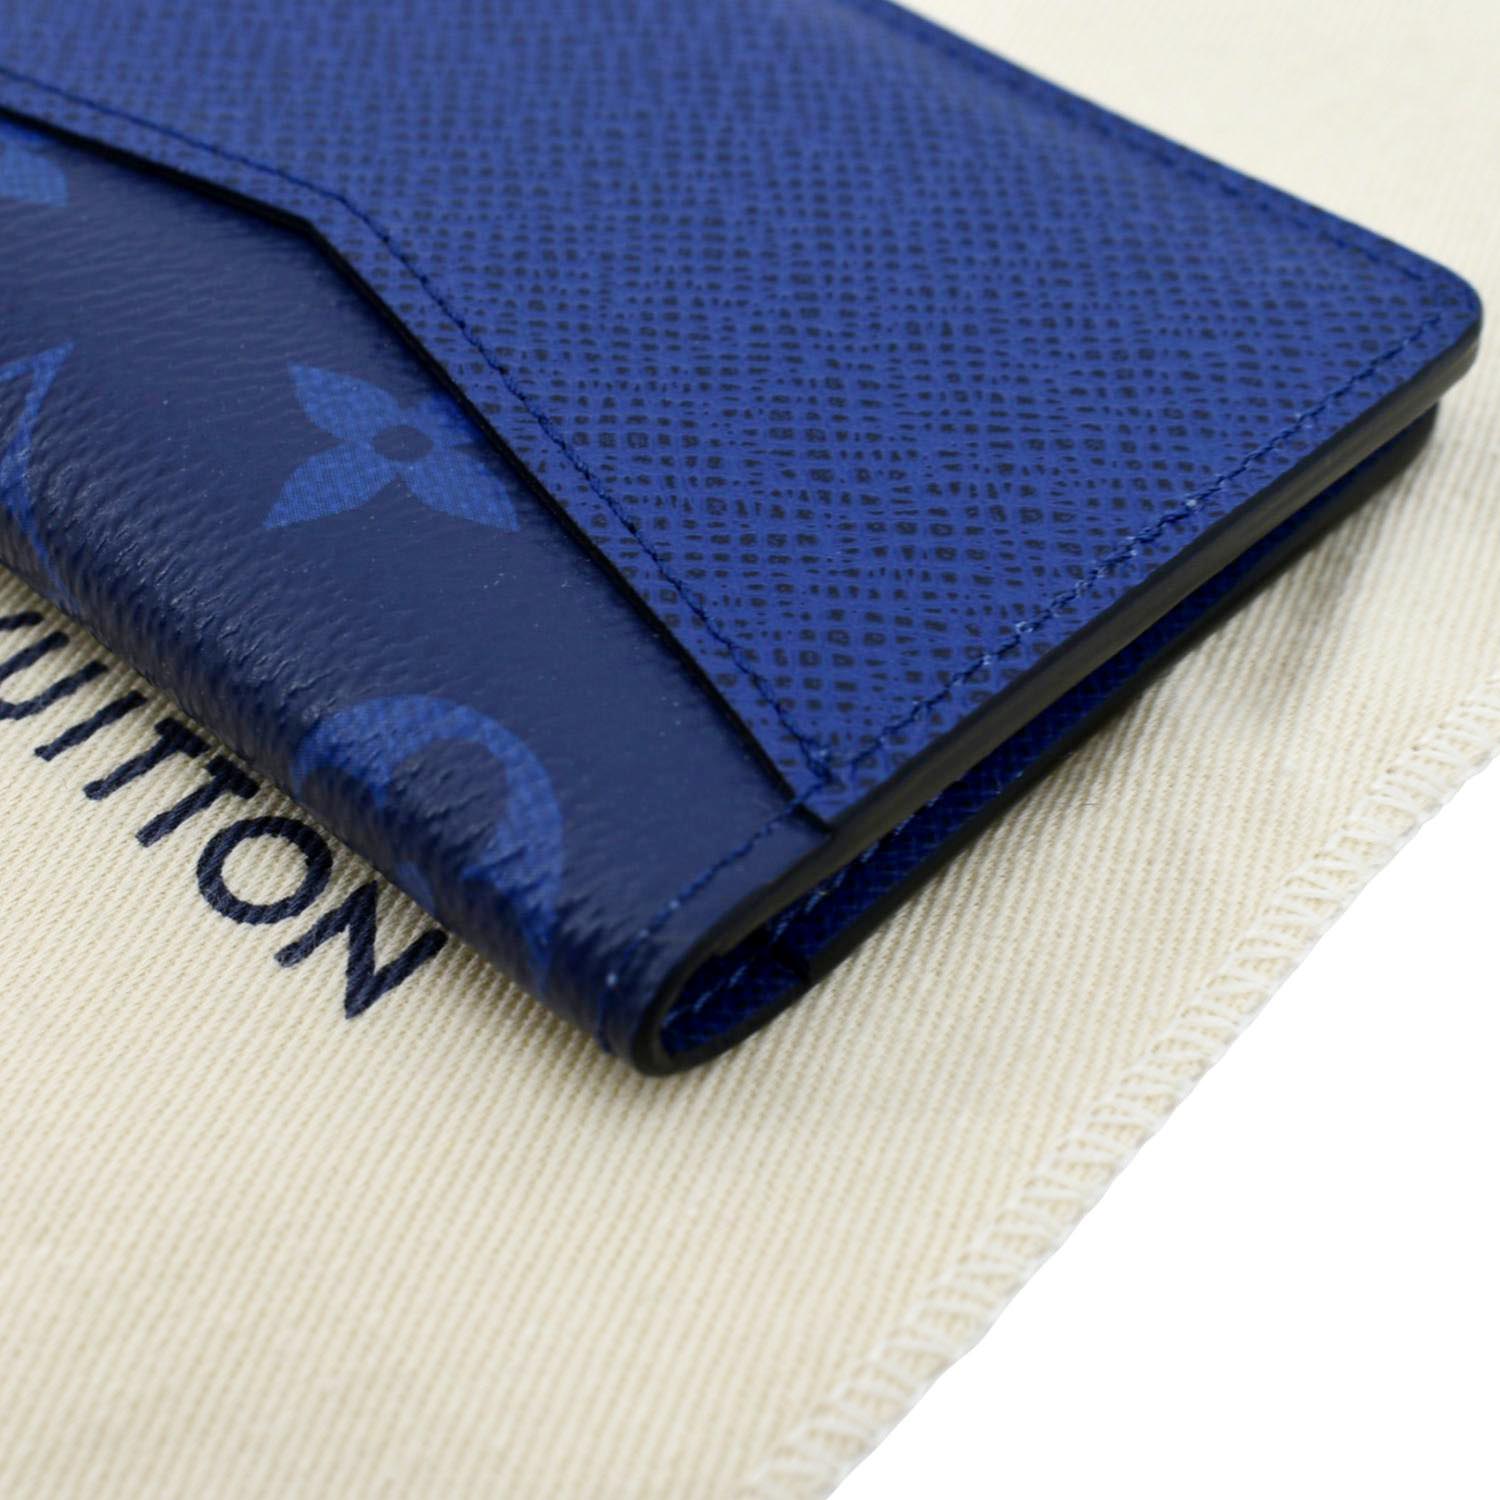 Louis Vuitton Pacific Blue Monogram Pocket Organizer